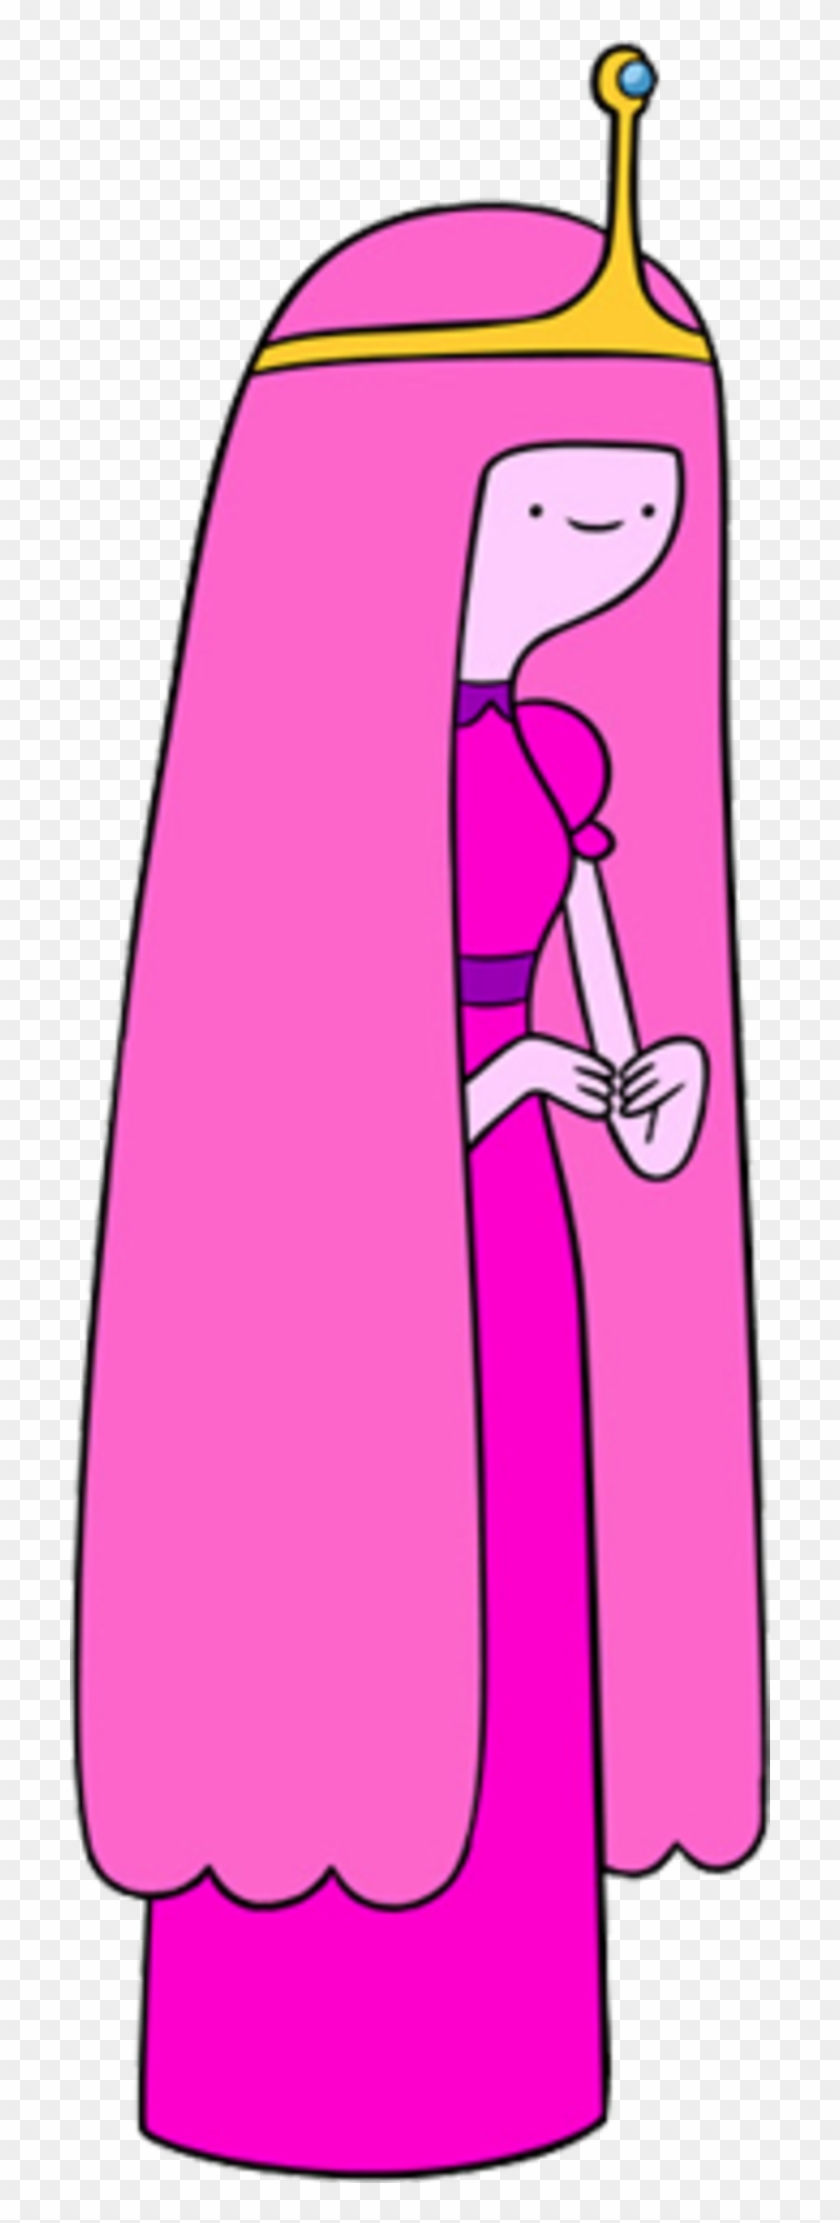 Princess Bubblegum Marceline The Vampire Queen Finn - Hynden Walch Princess Bubblegum #703769